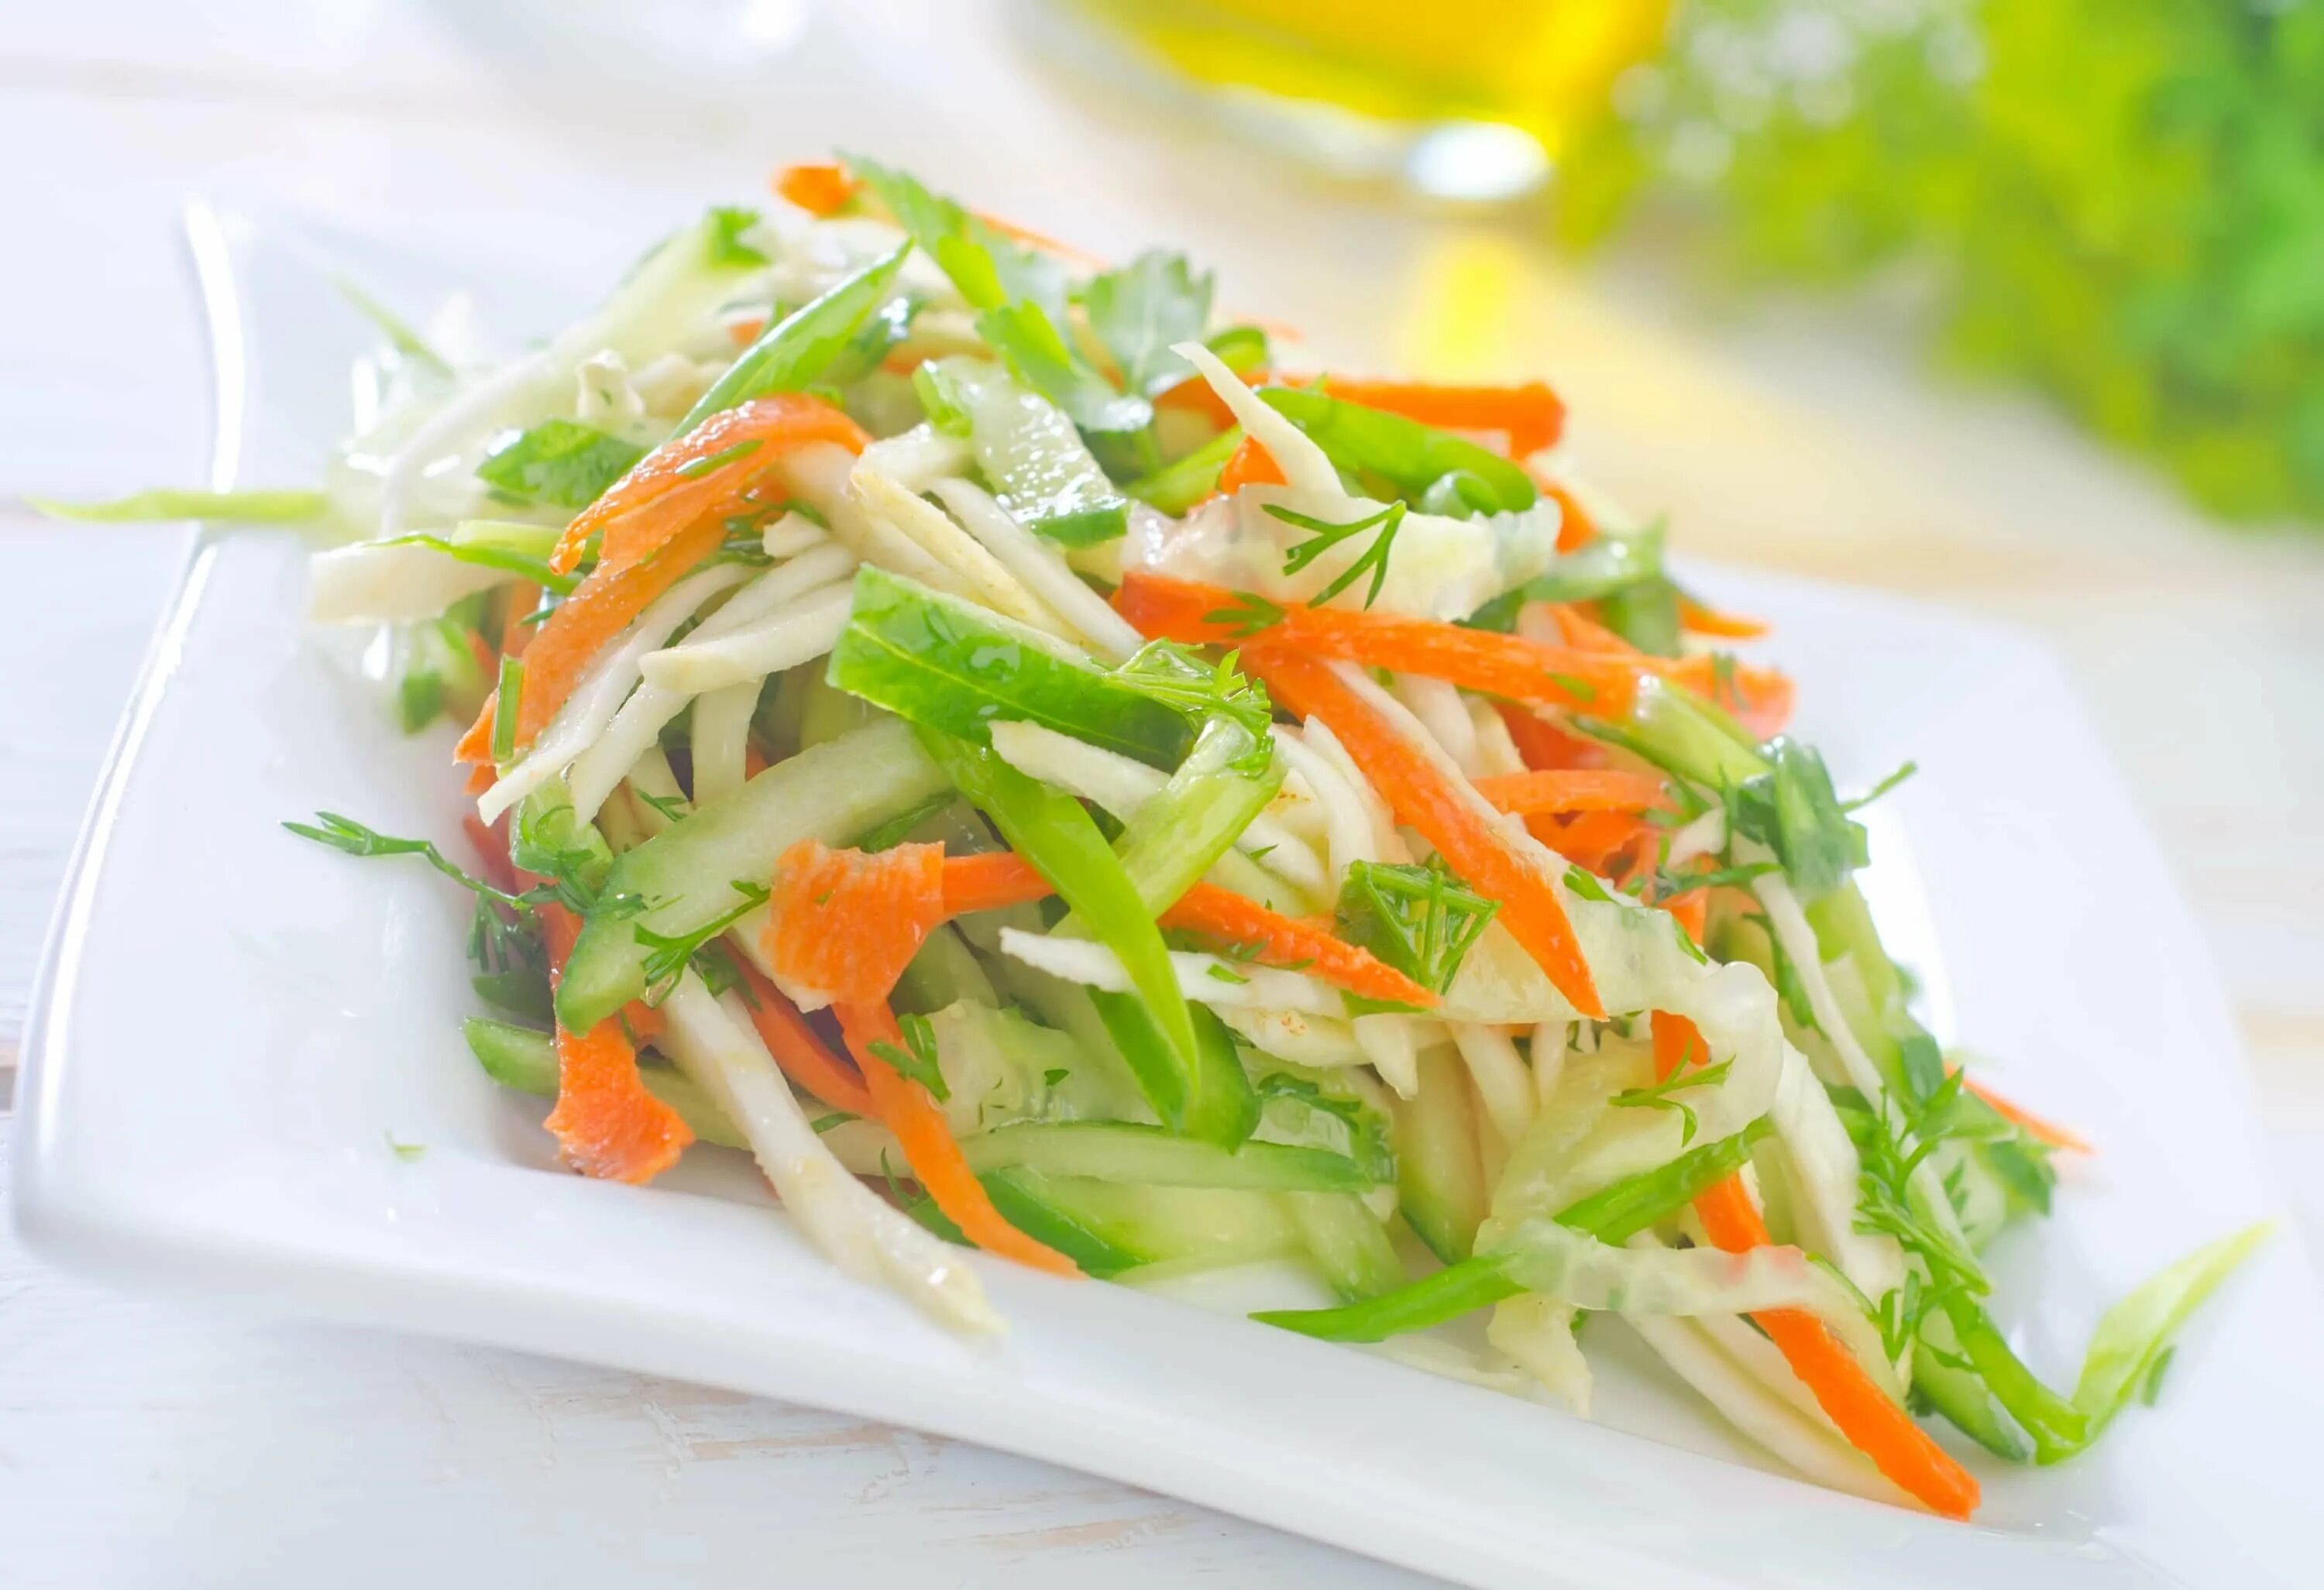 Витаминный (капуста, перец, огурец, морковь) 100г - 35р. Салат из капусты. Салат витаминный. Овощной витаминный салат. Овощной салат витамины